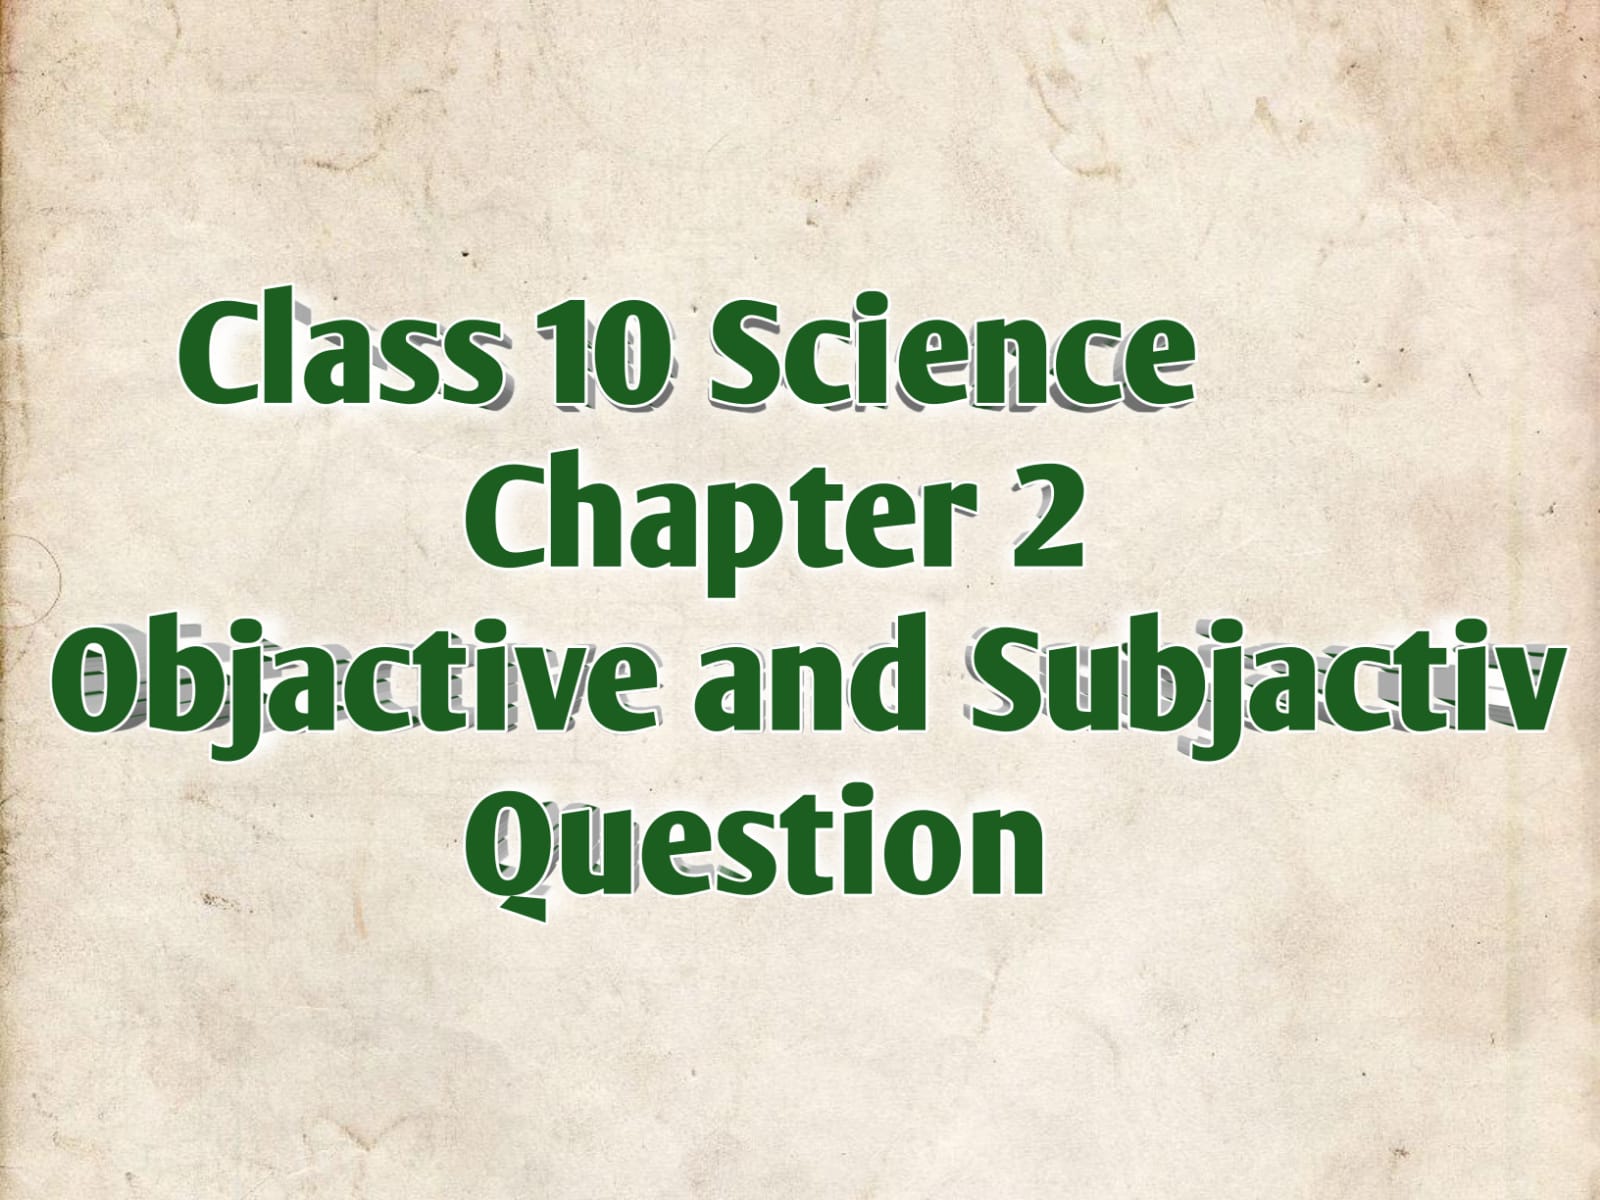 class 10 science question bank chapter 2 bihar board